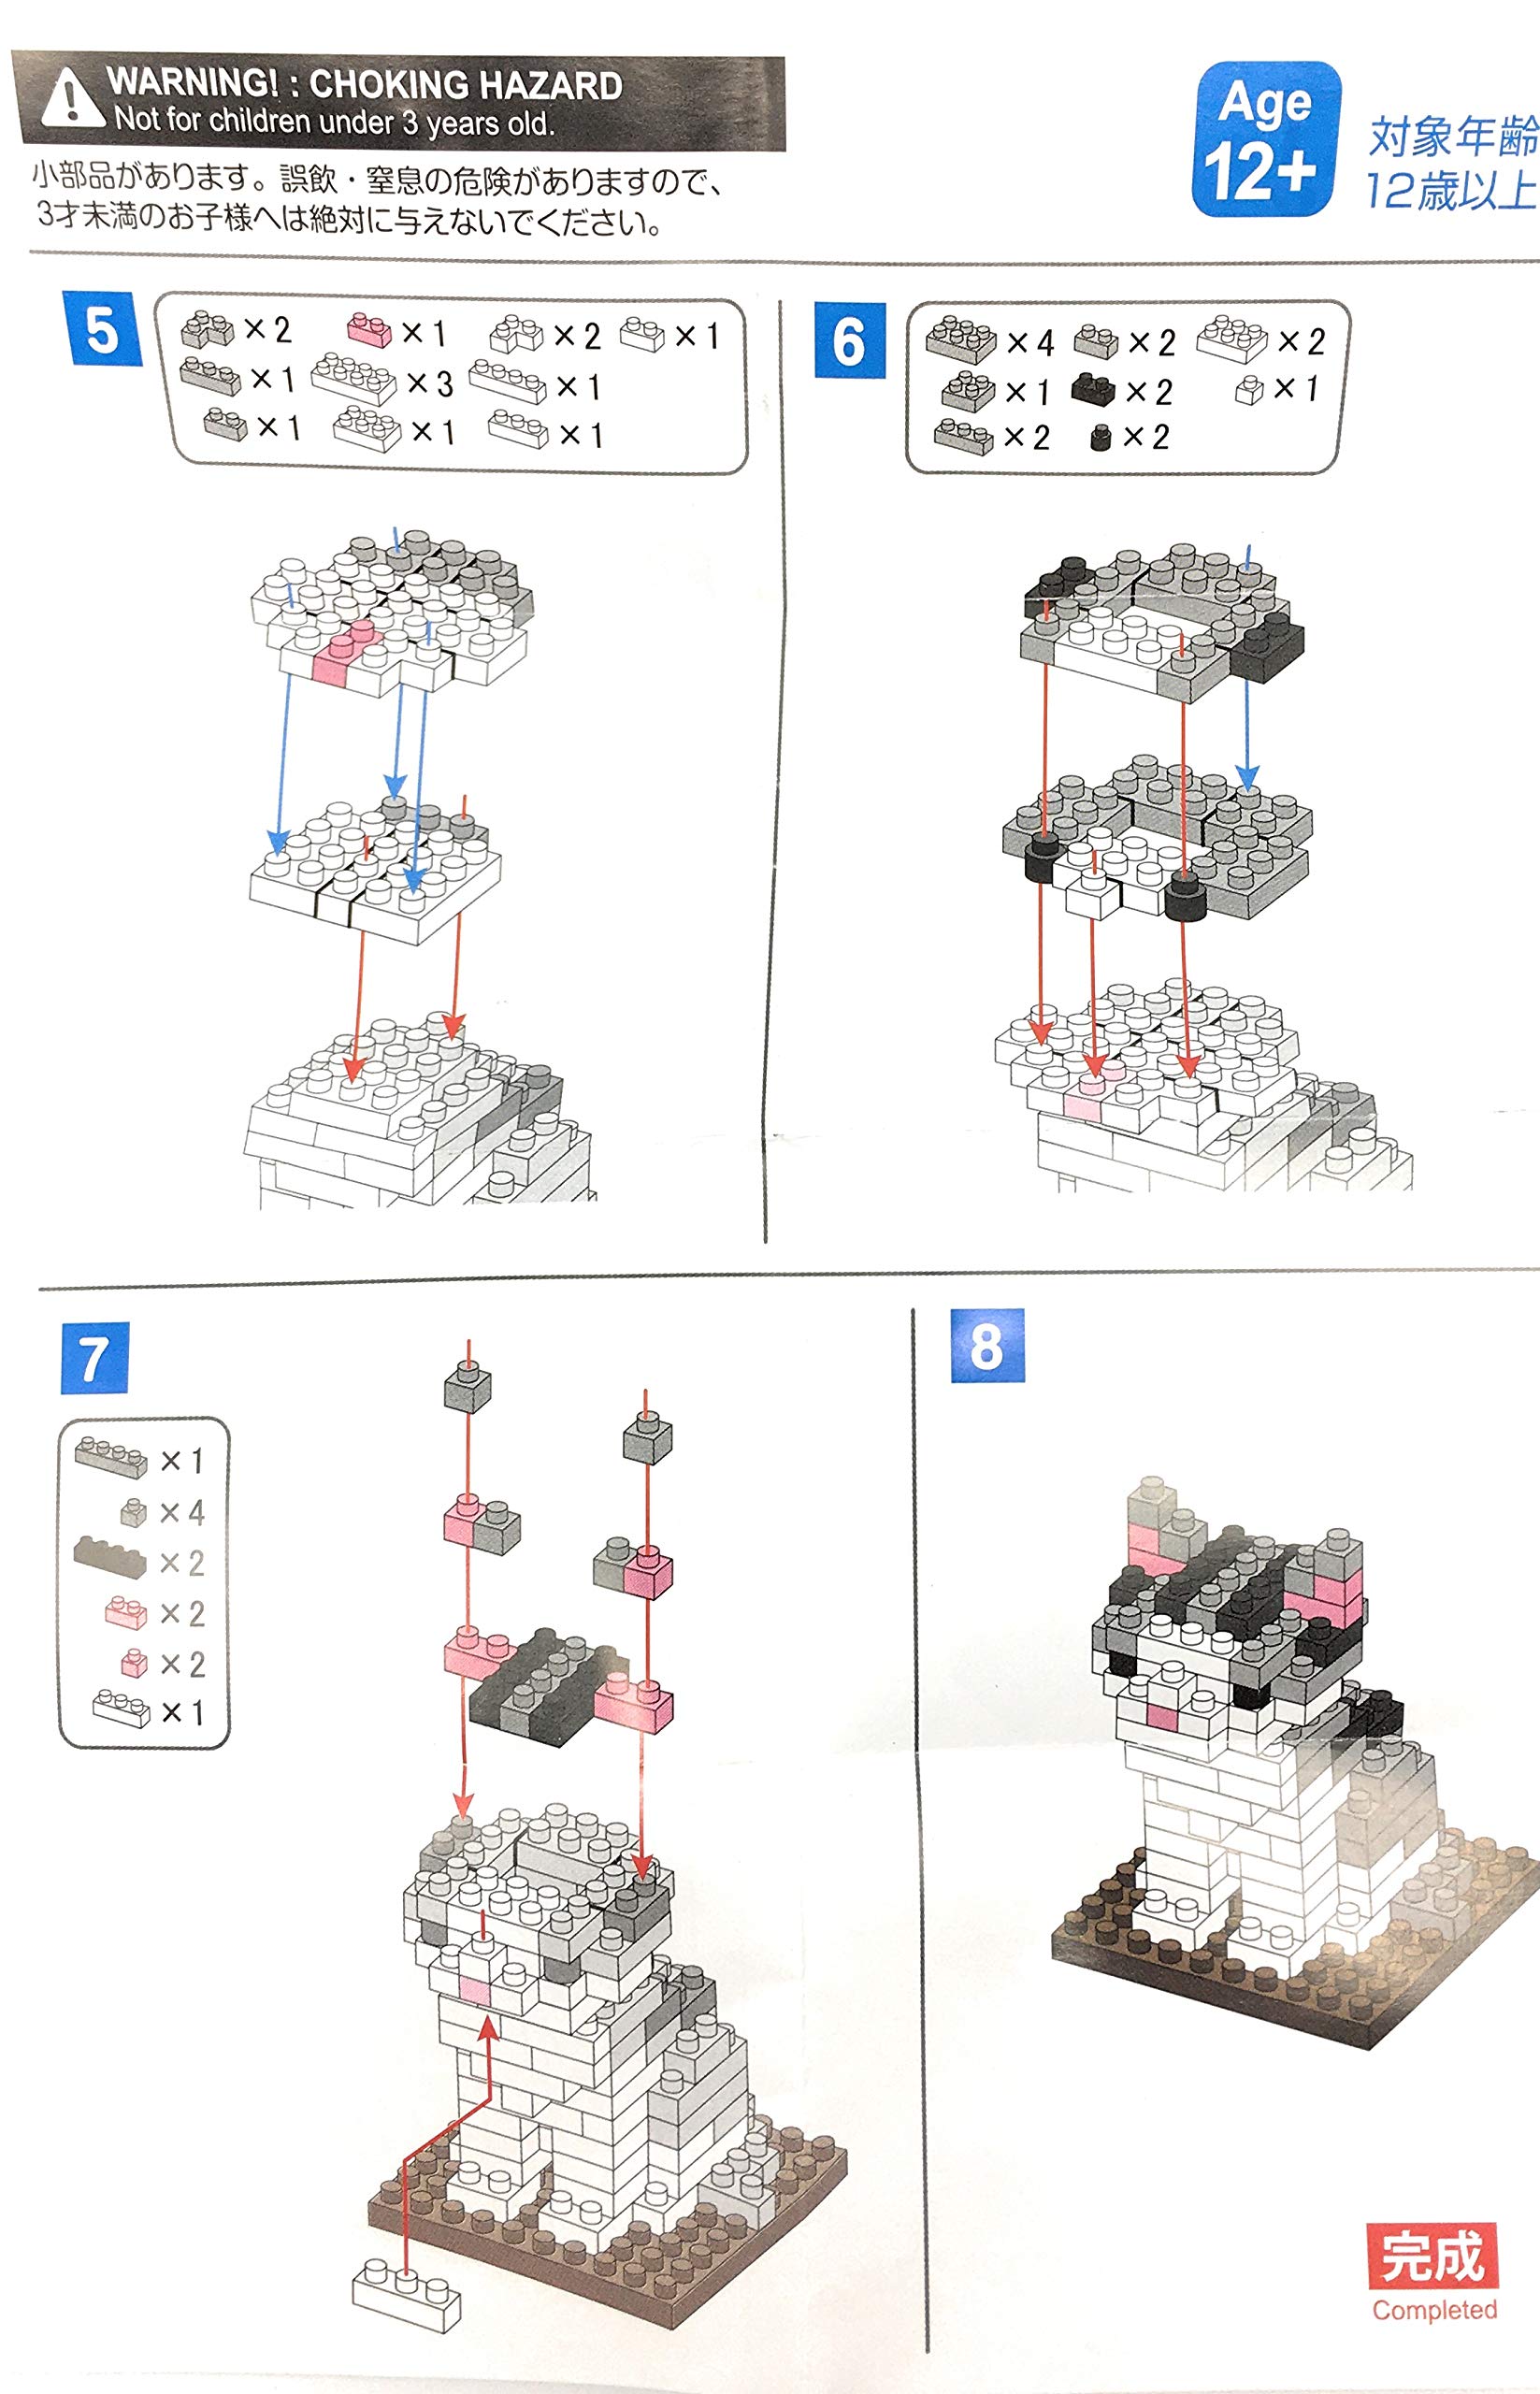 Daiso Petite Block Building Kit - American Shorthair Cat